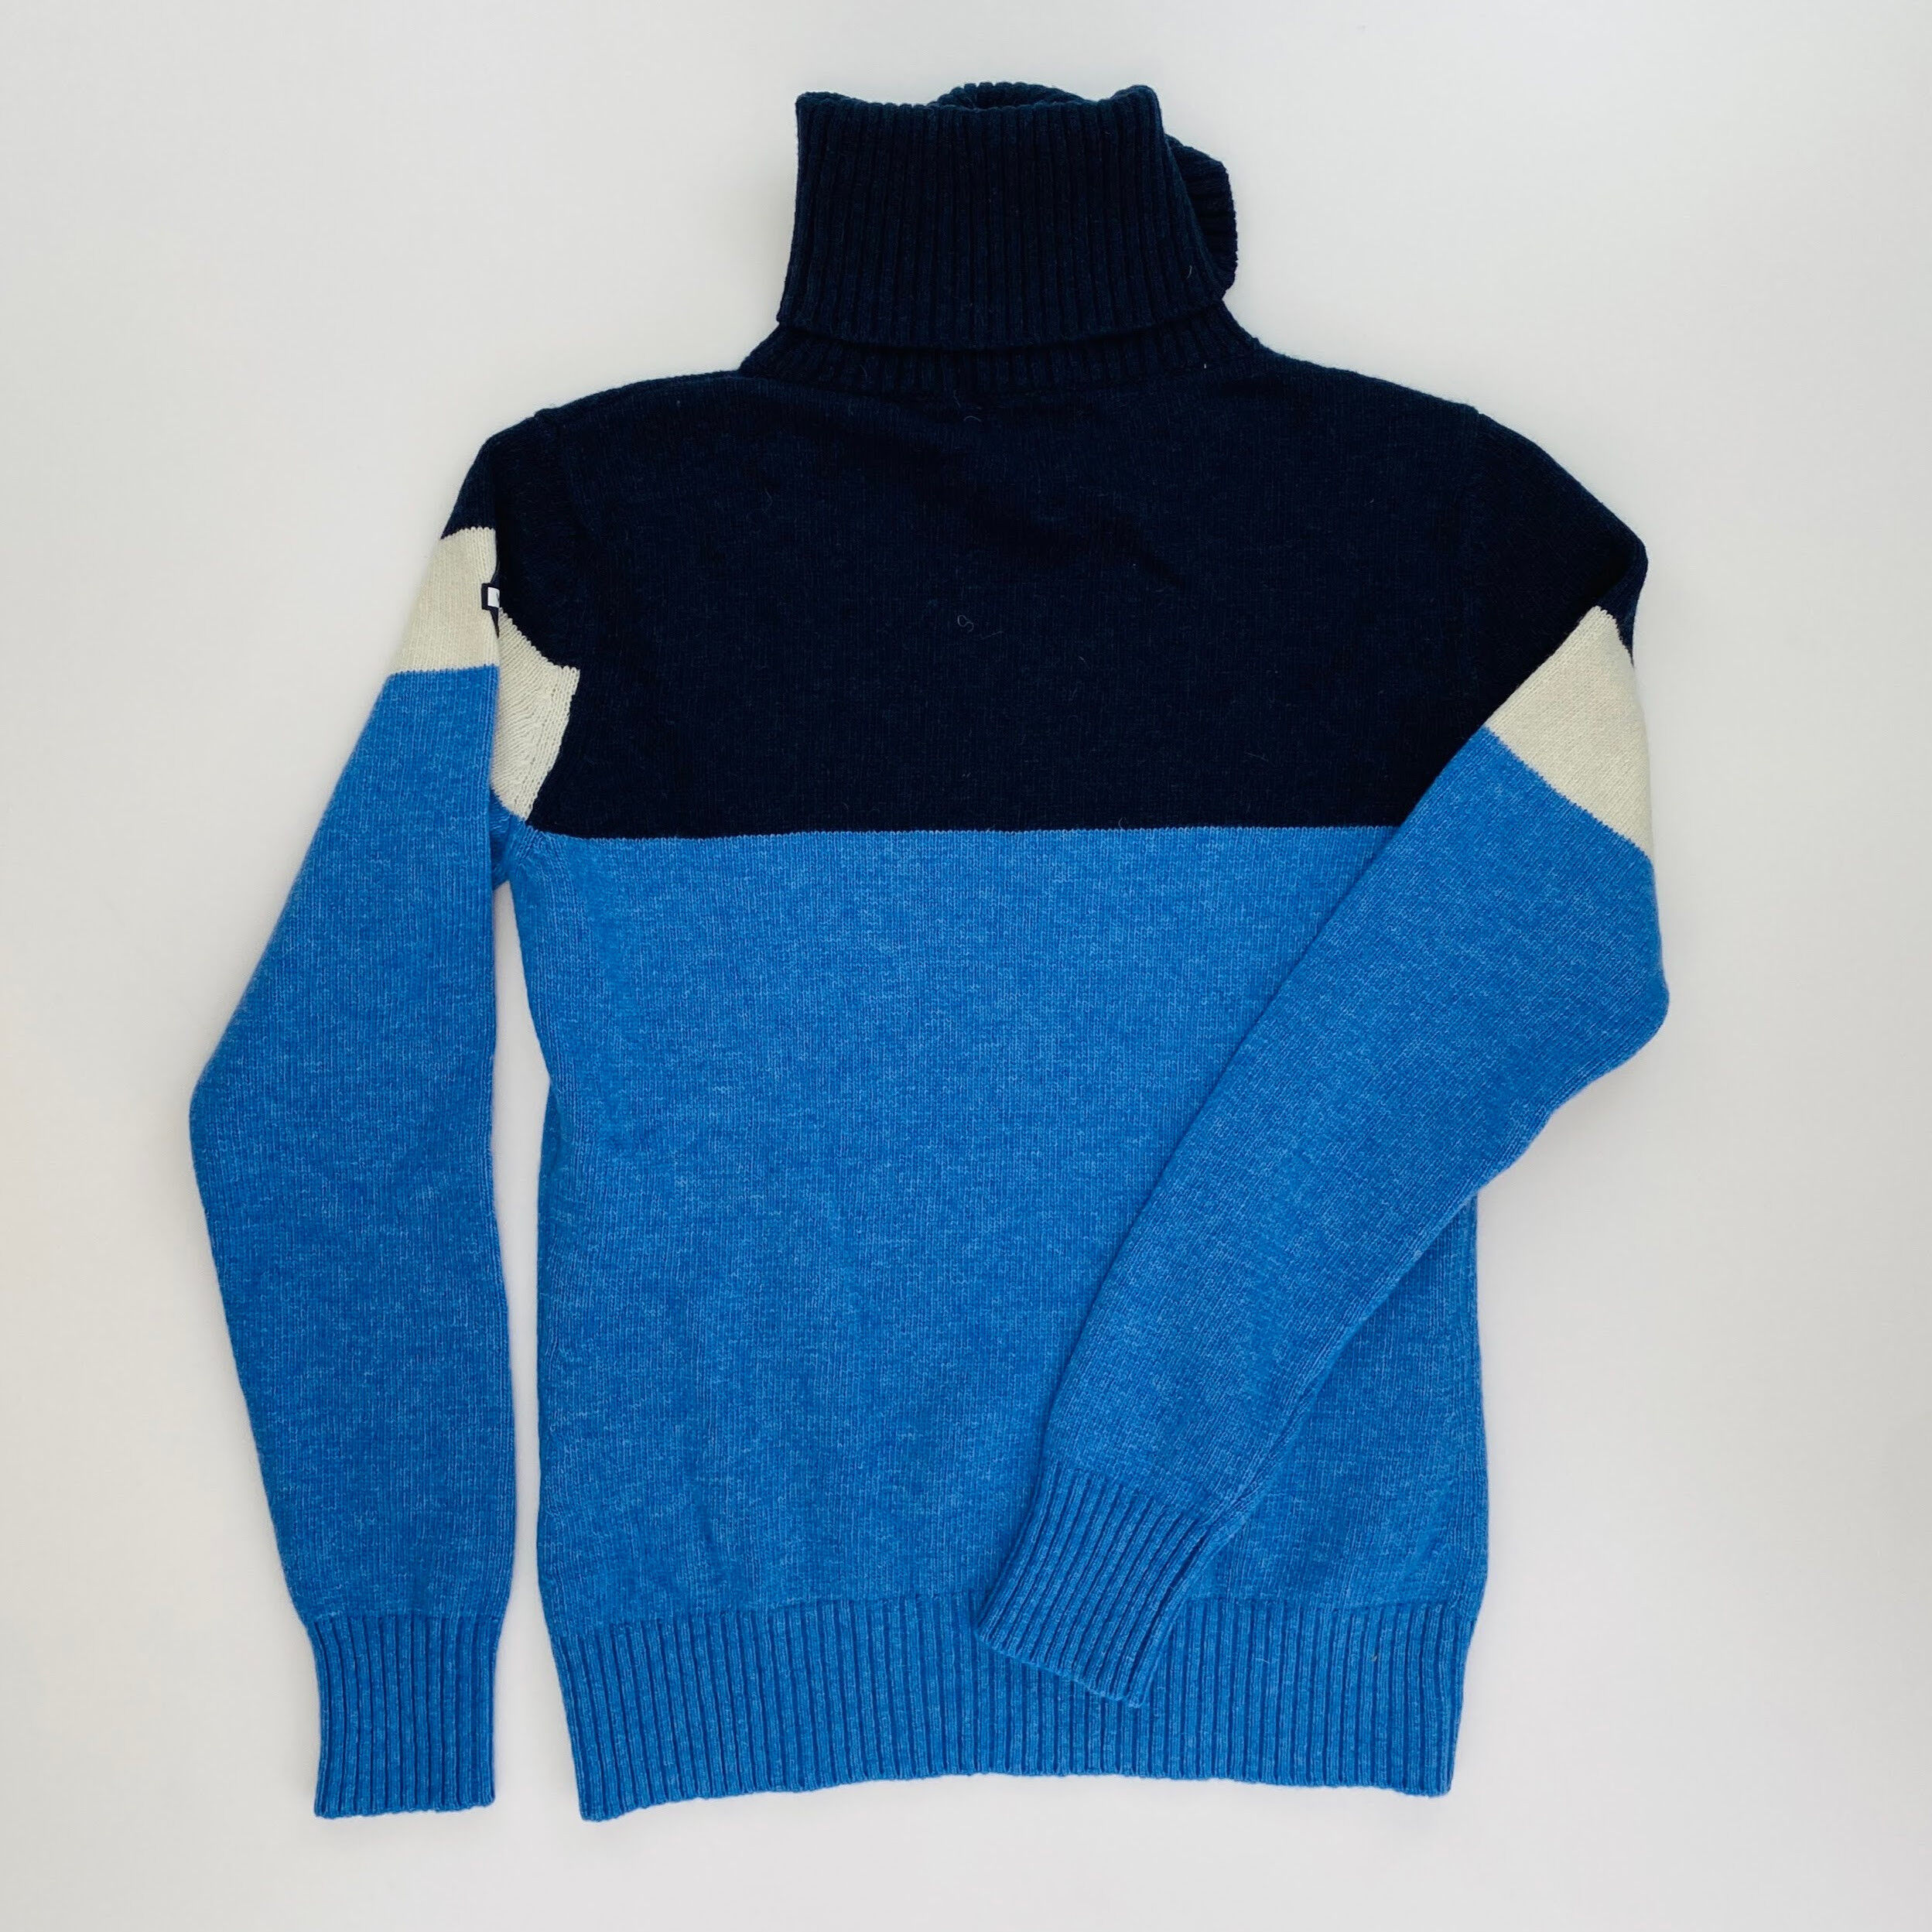 Vuarnet W'S Baltoro Wool Pull - Seconde main Sweatshirt femme - Multicolore - S | Hardloop